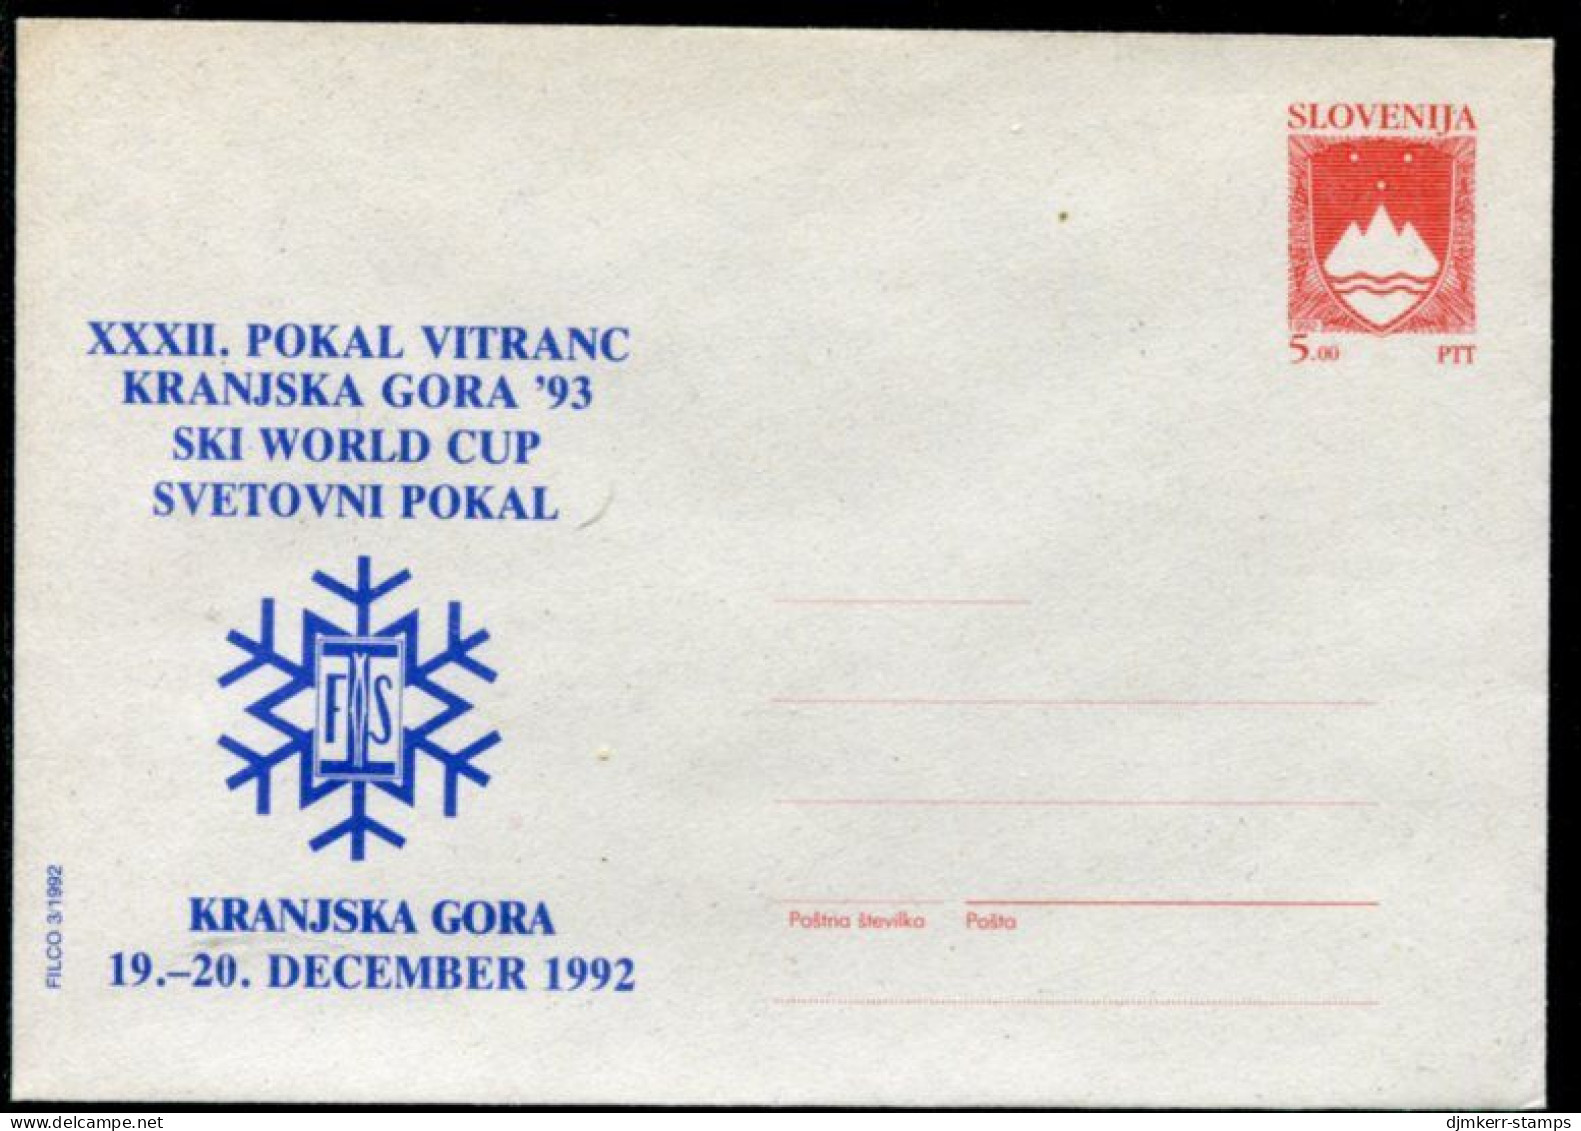 SLOVENIA 1992 5.00 T.  Arms Publicity Postal Stationery Envelope, Unused.  As Michel U1b - Slowenien